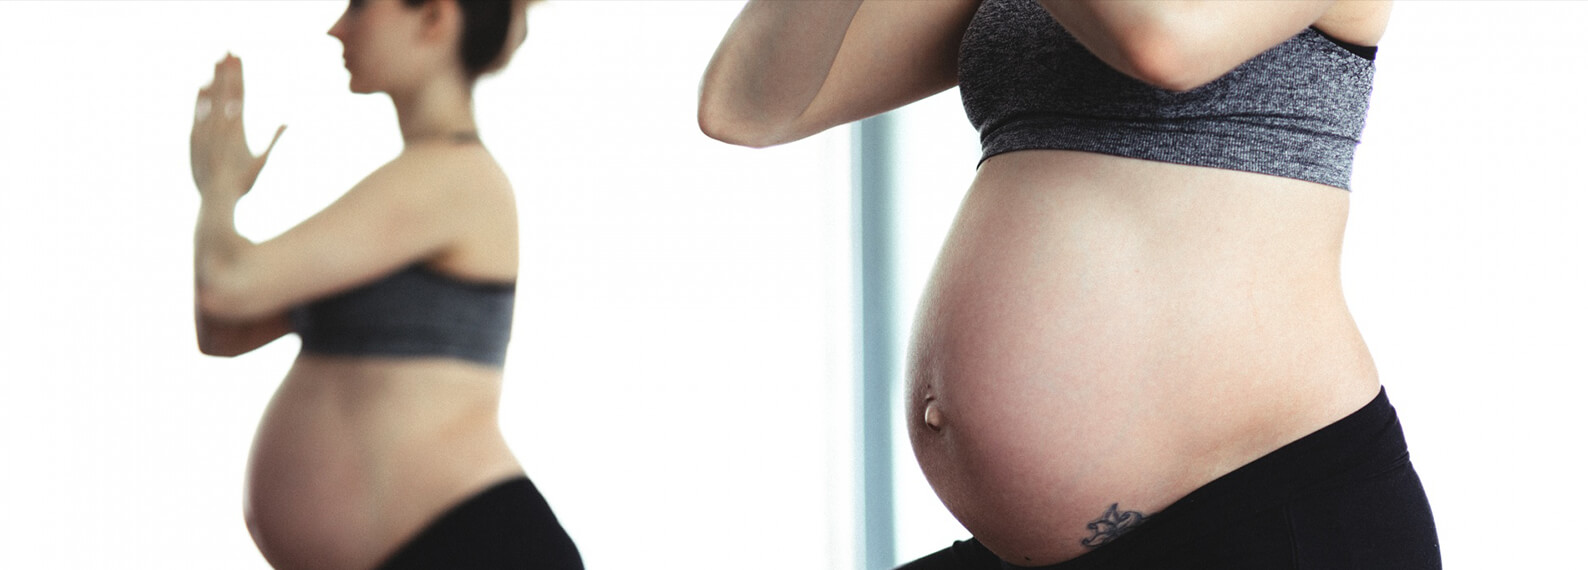 Ejercicios de yoga para embarazadas: Primer trimestre (1/3)